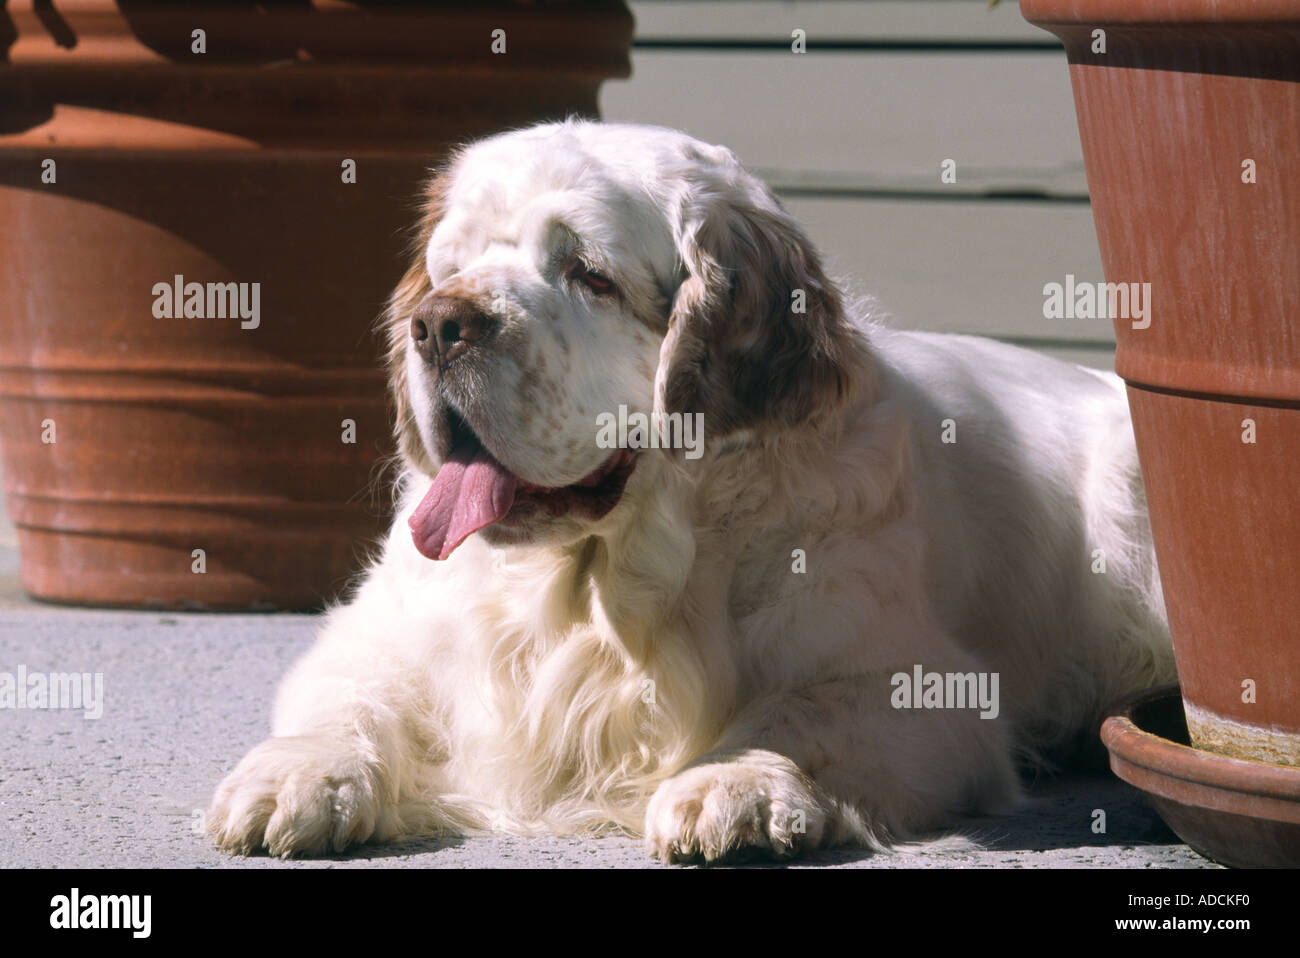 Clumber Spaniel dog resting outside model released image Stock Photo